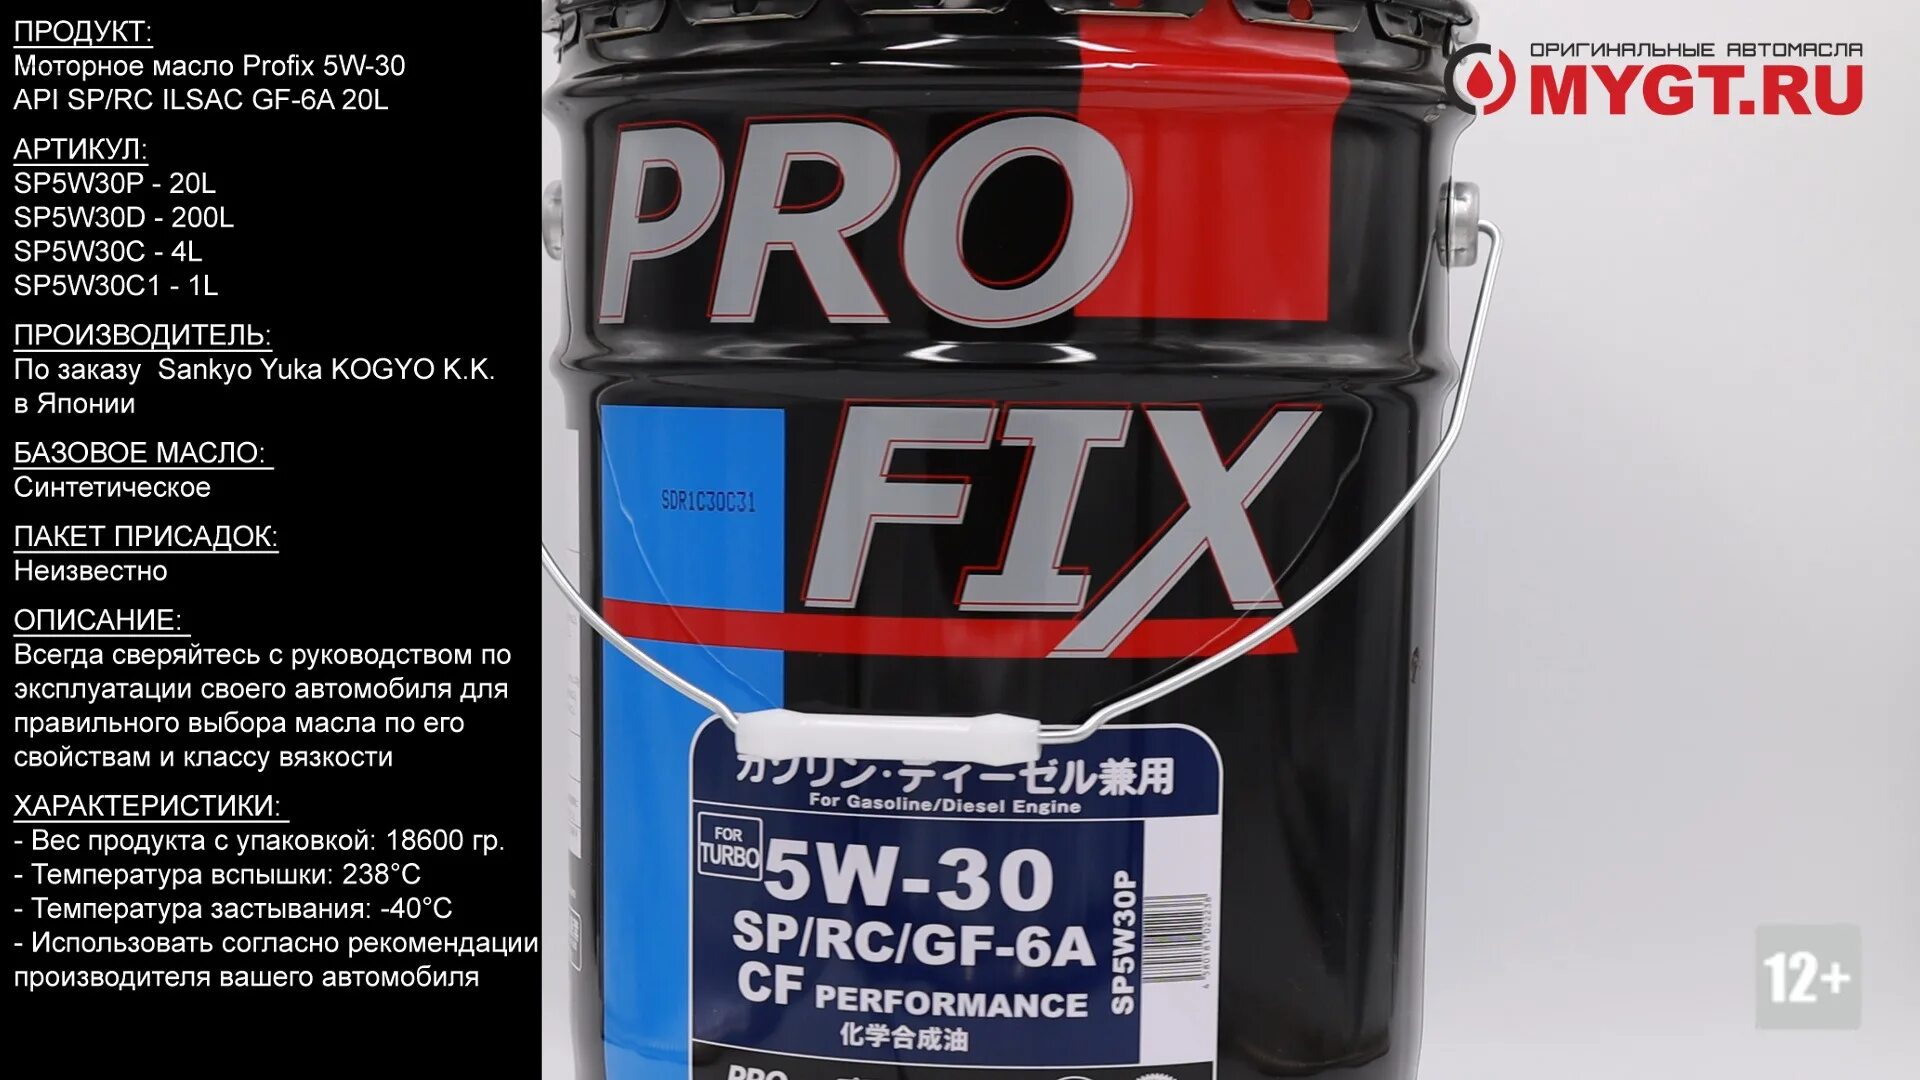 PROFIX SP/gf-6a 5w30. PROFIX 5w30 gf-6a. PROFIX 5w30 SP. Sp5w30c1 PROFIX. Profix 5w40